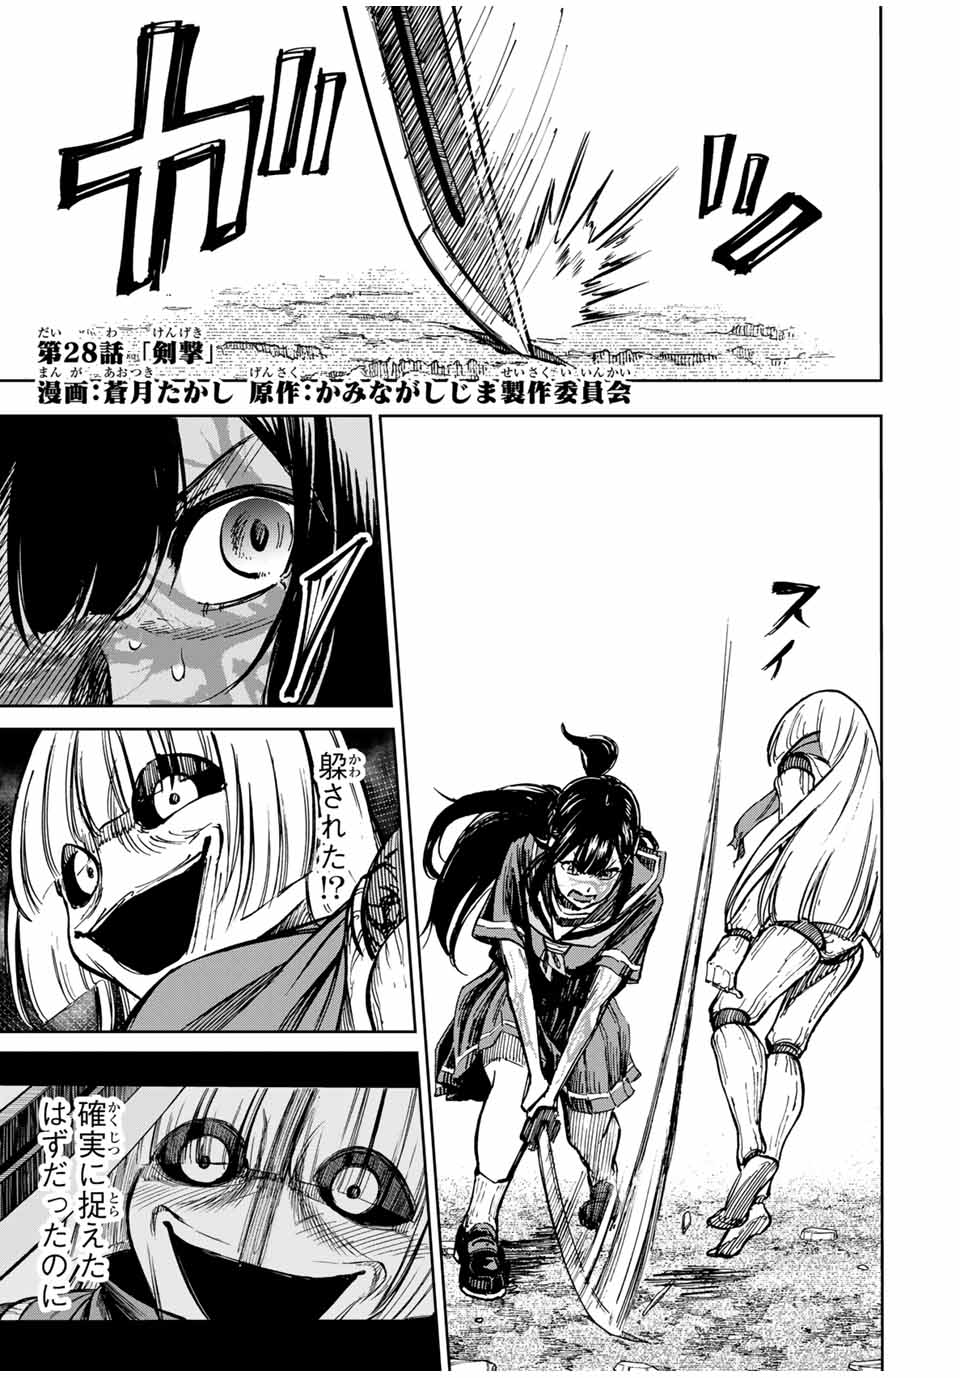 Kaminagashijima – Rinne no Miko - Chapter 28 - Page 1